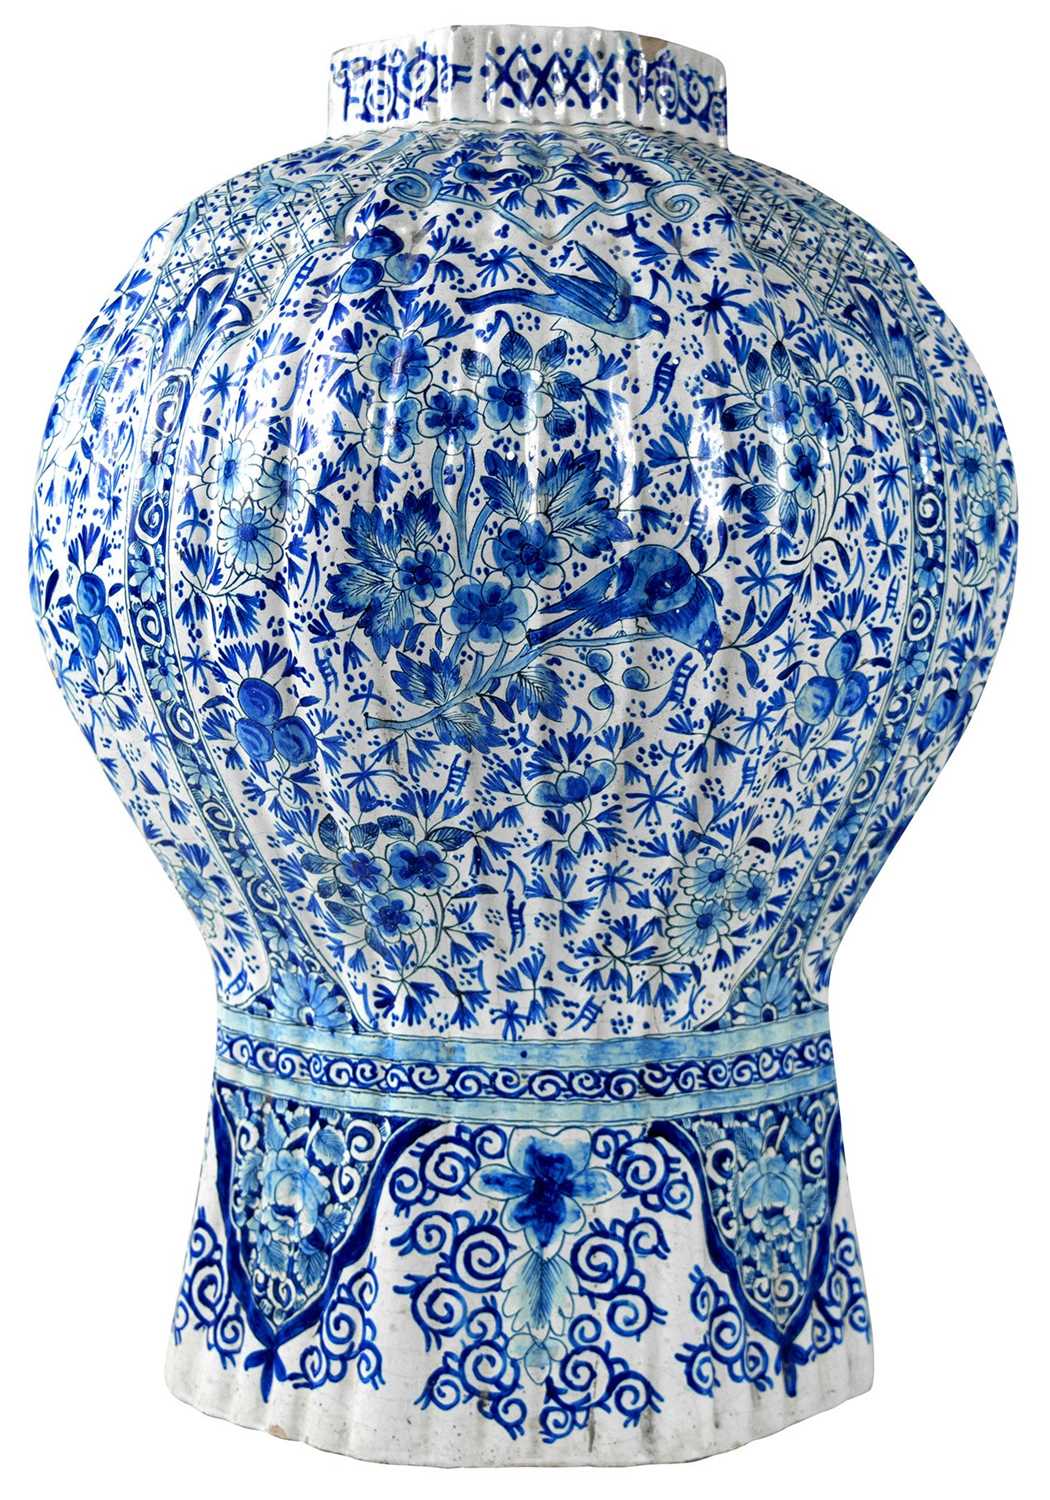 A Dutch Delft large blue and white vase